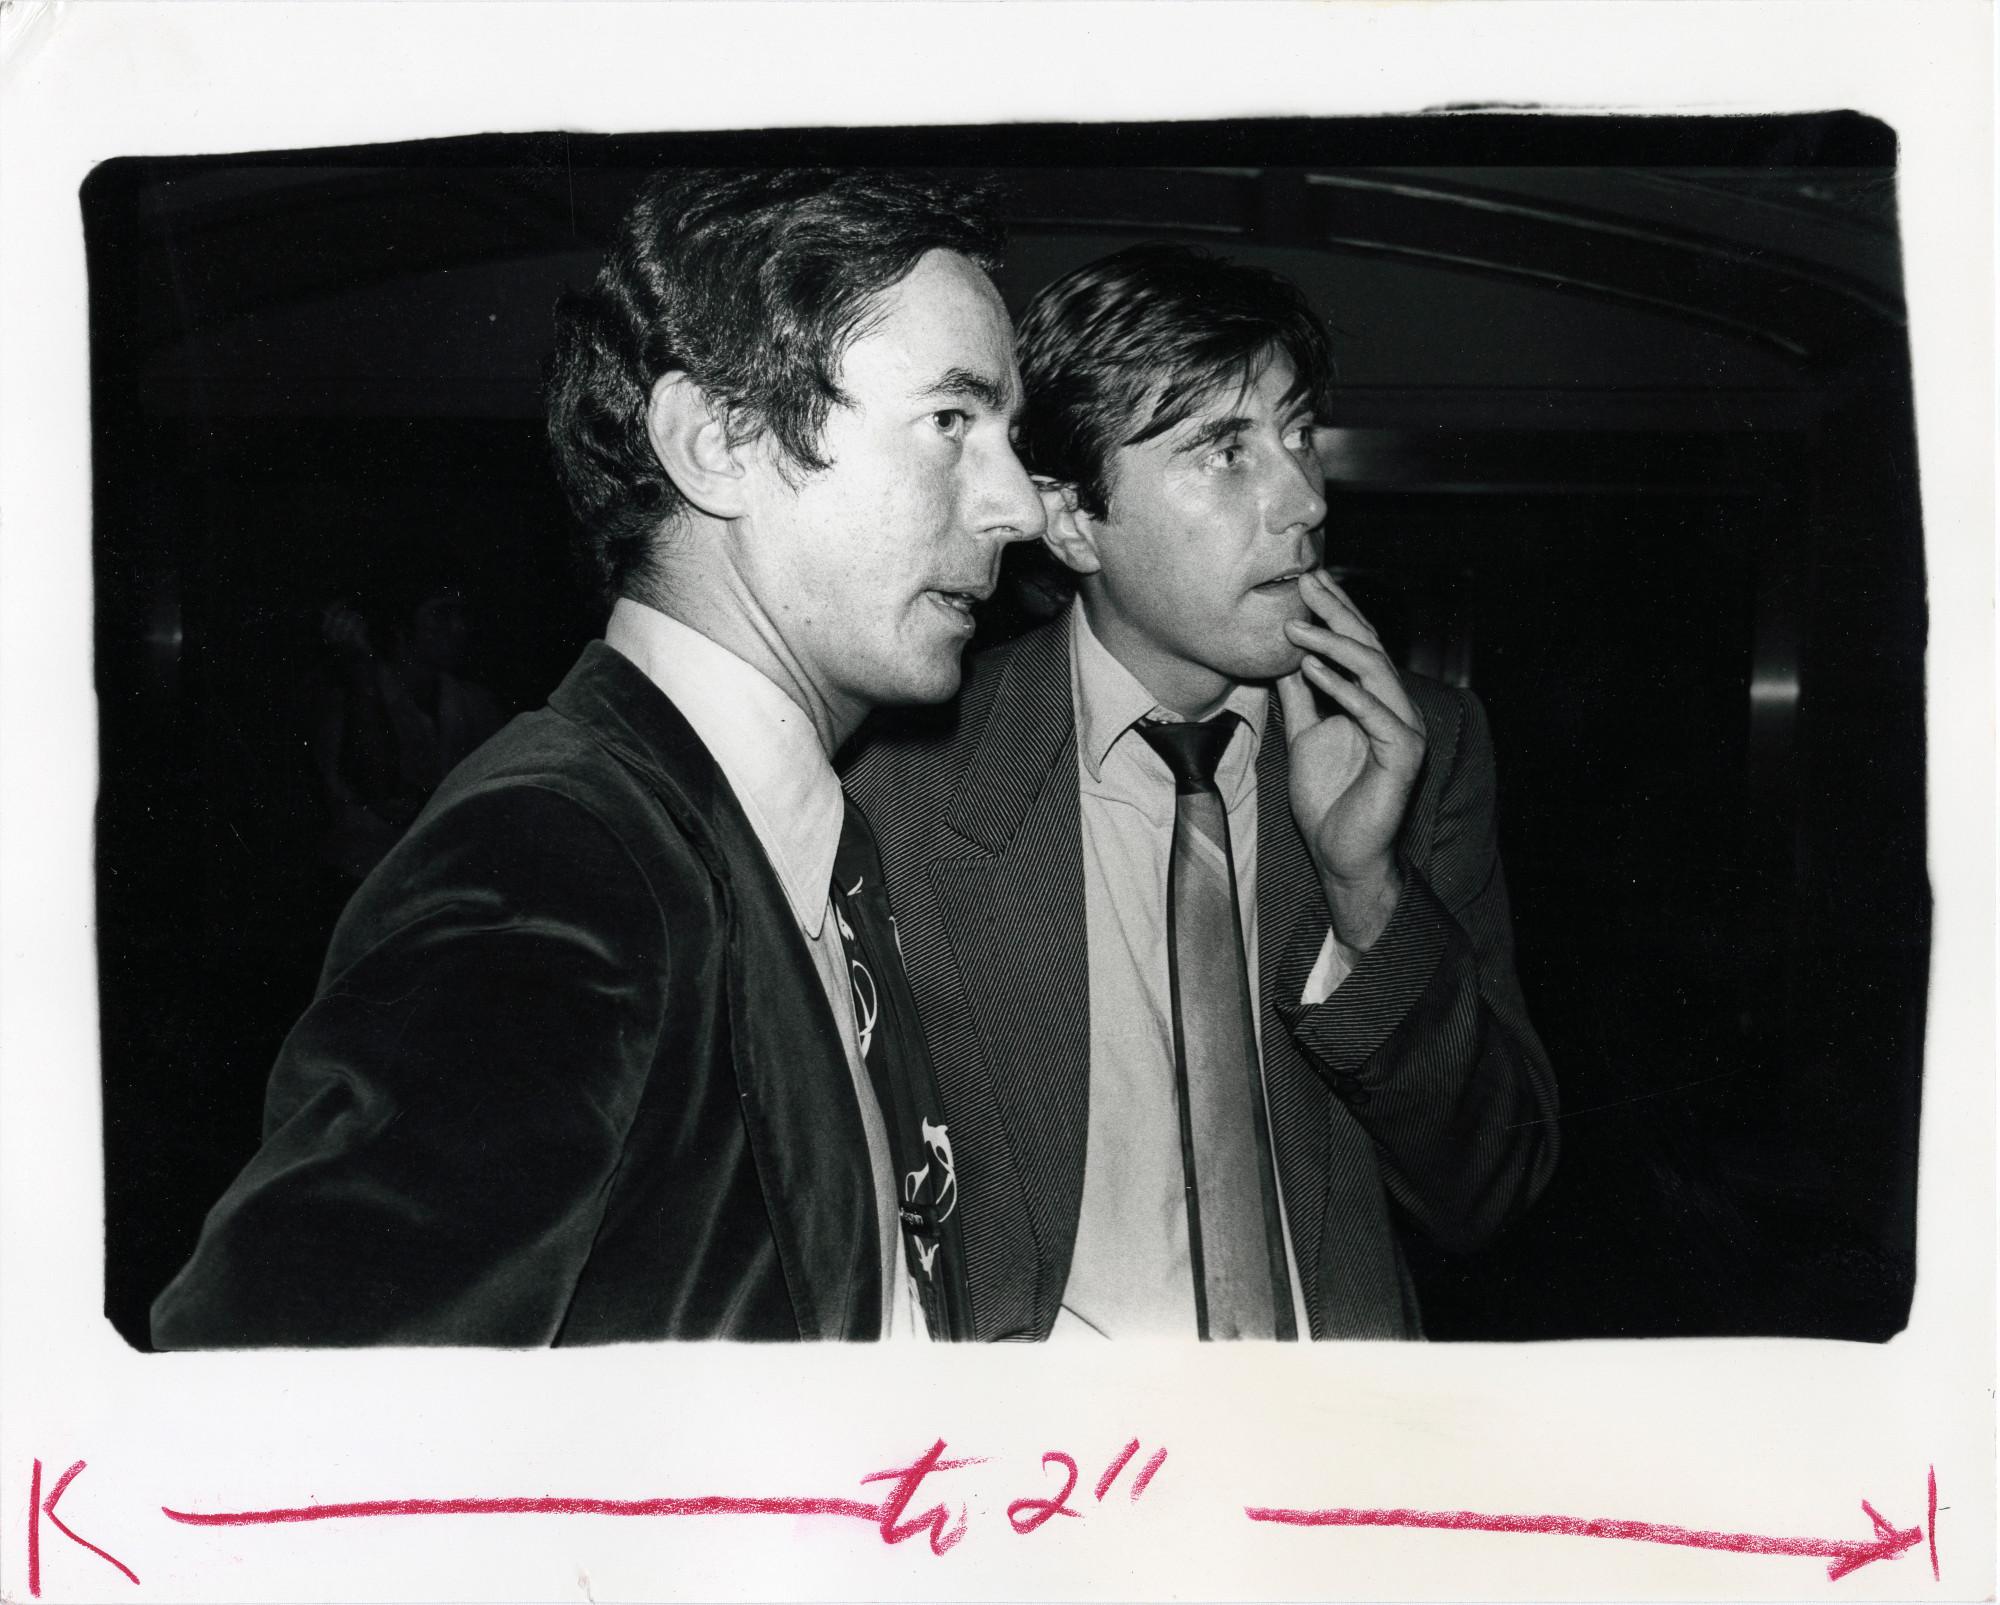 Andy Warhol Portrait Photograph - Bryan Ferry and Bob Feiden